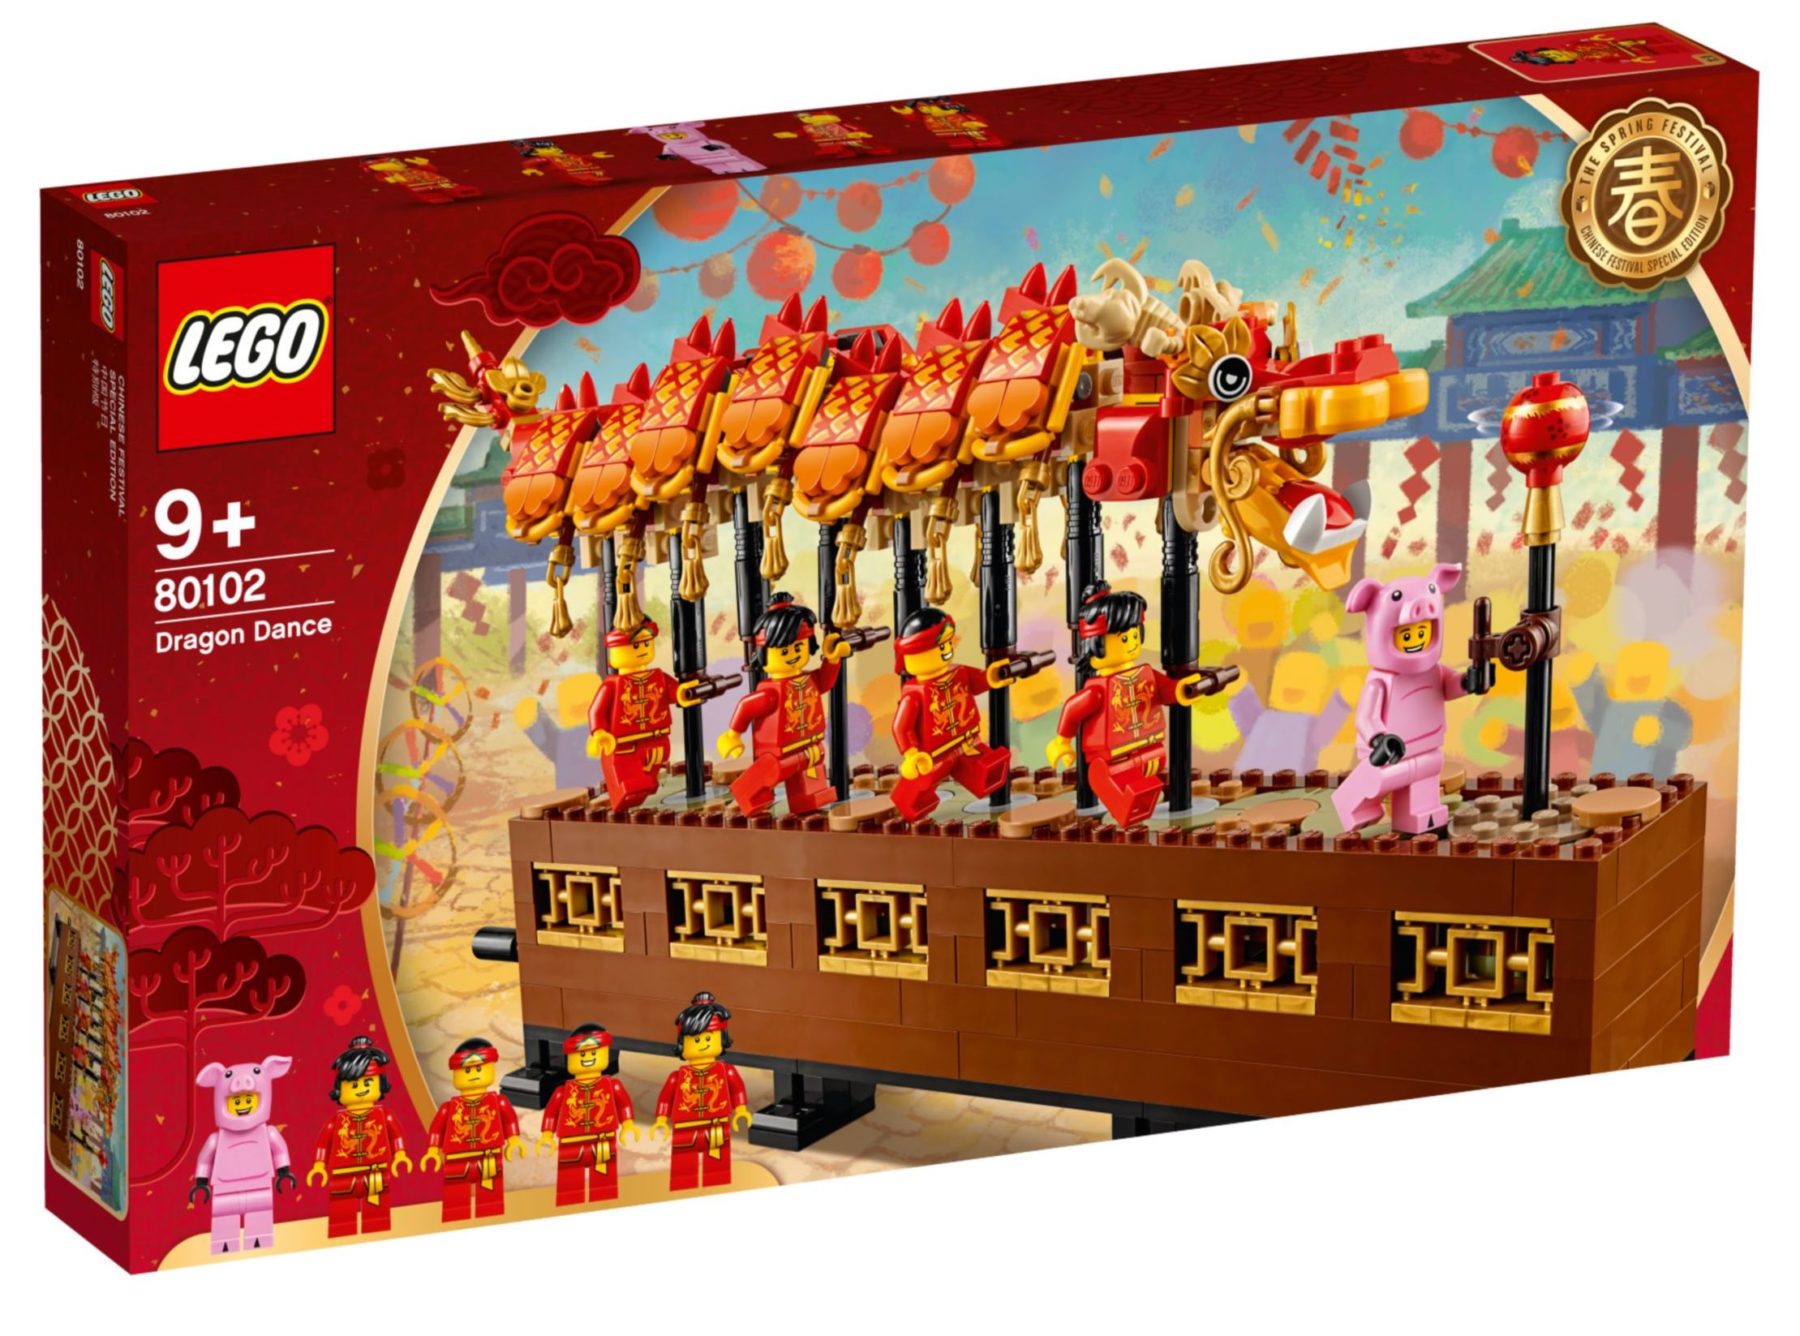 LEGO 80102 Dragon Dance Box